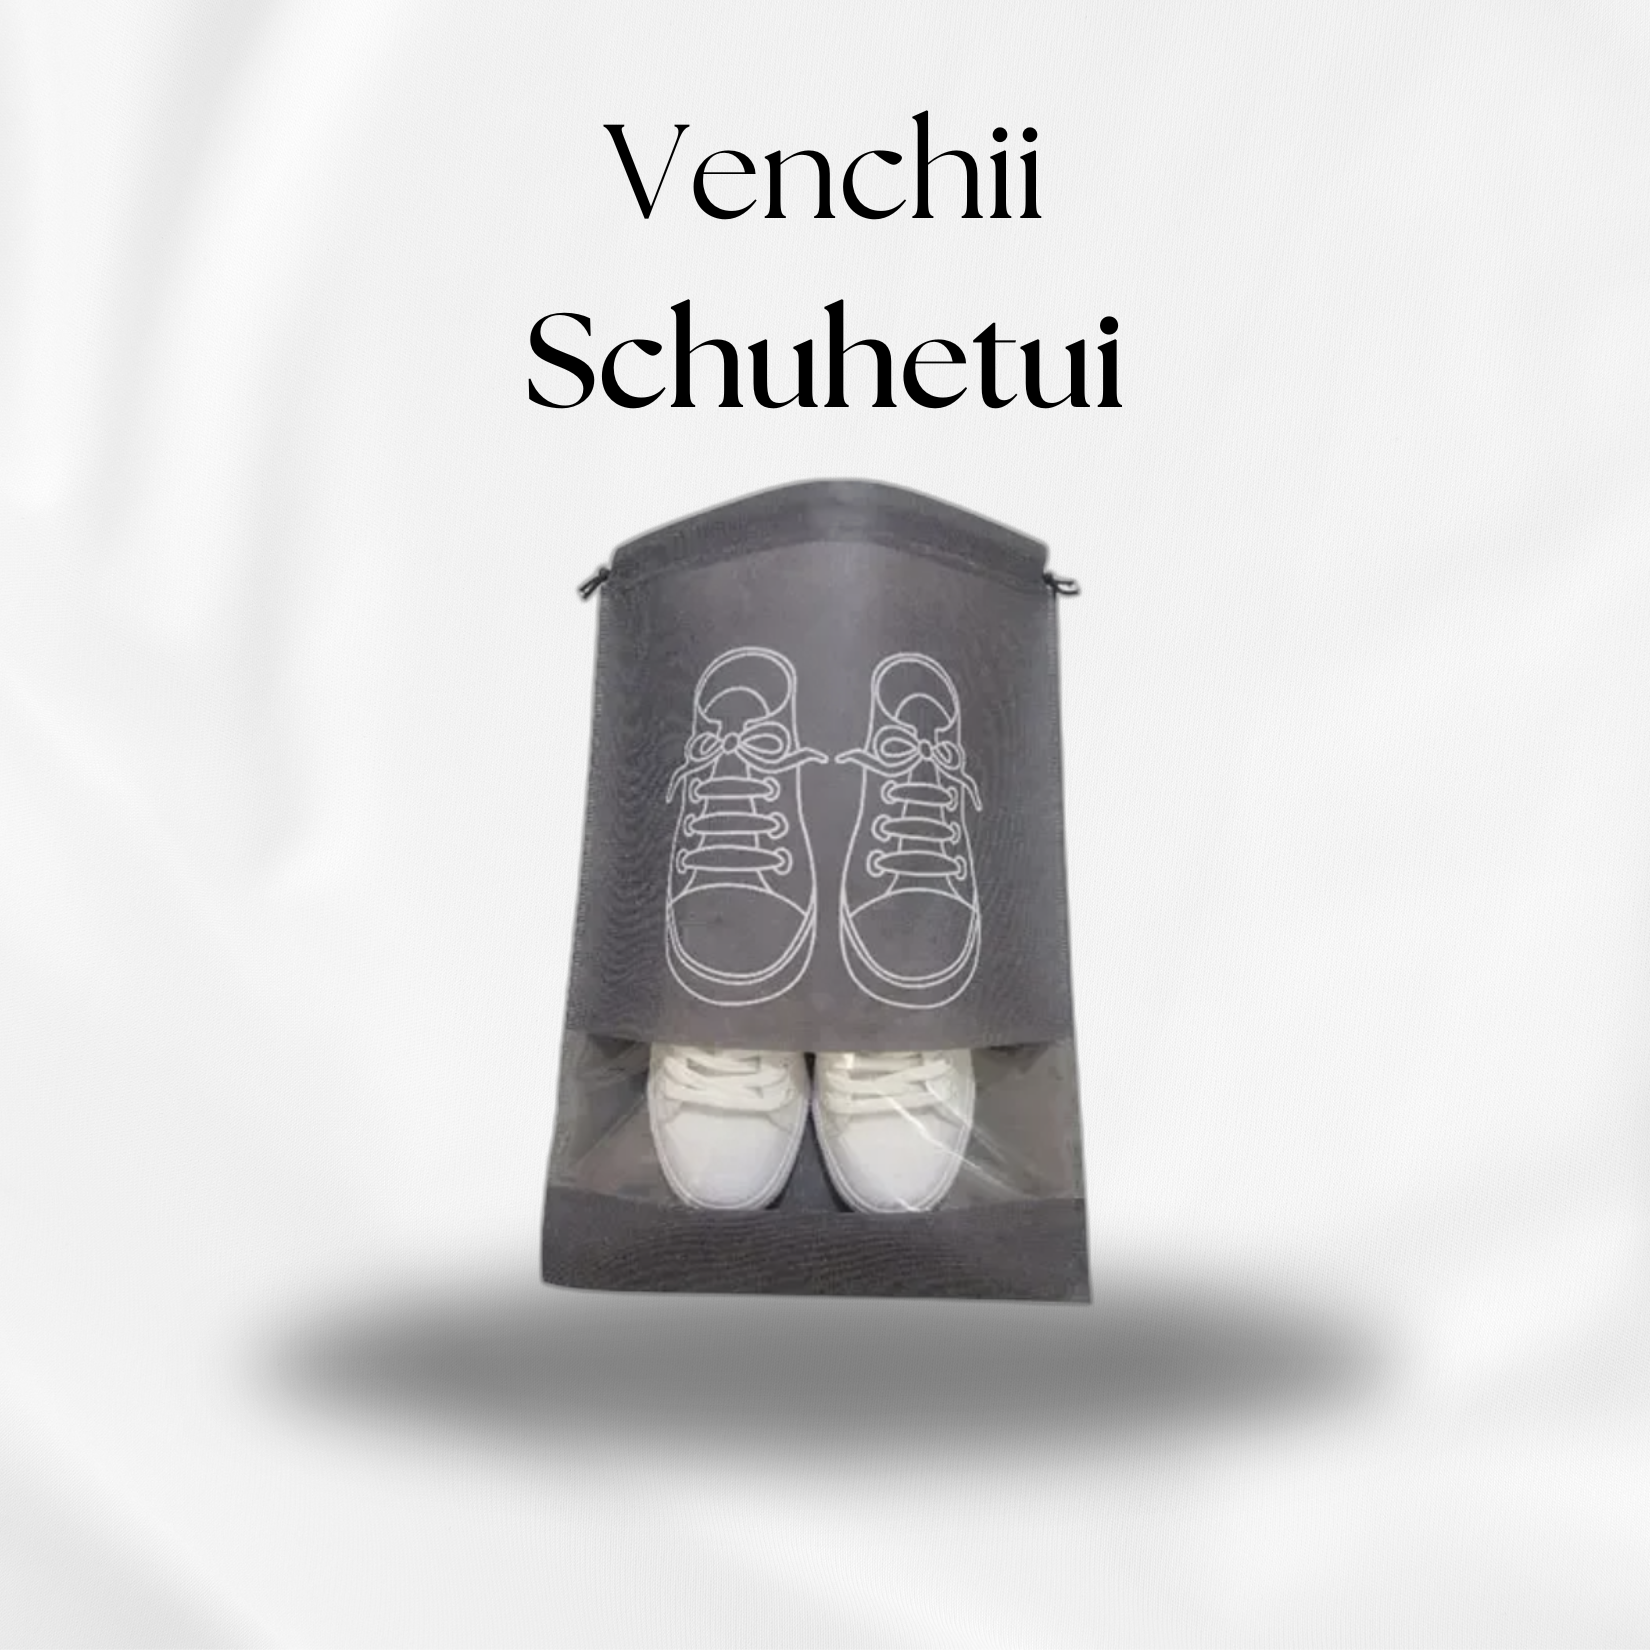 Venchii - Schuhetui